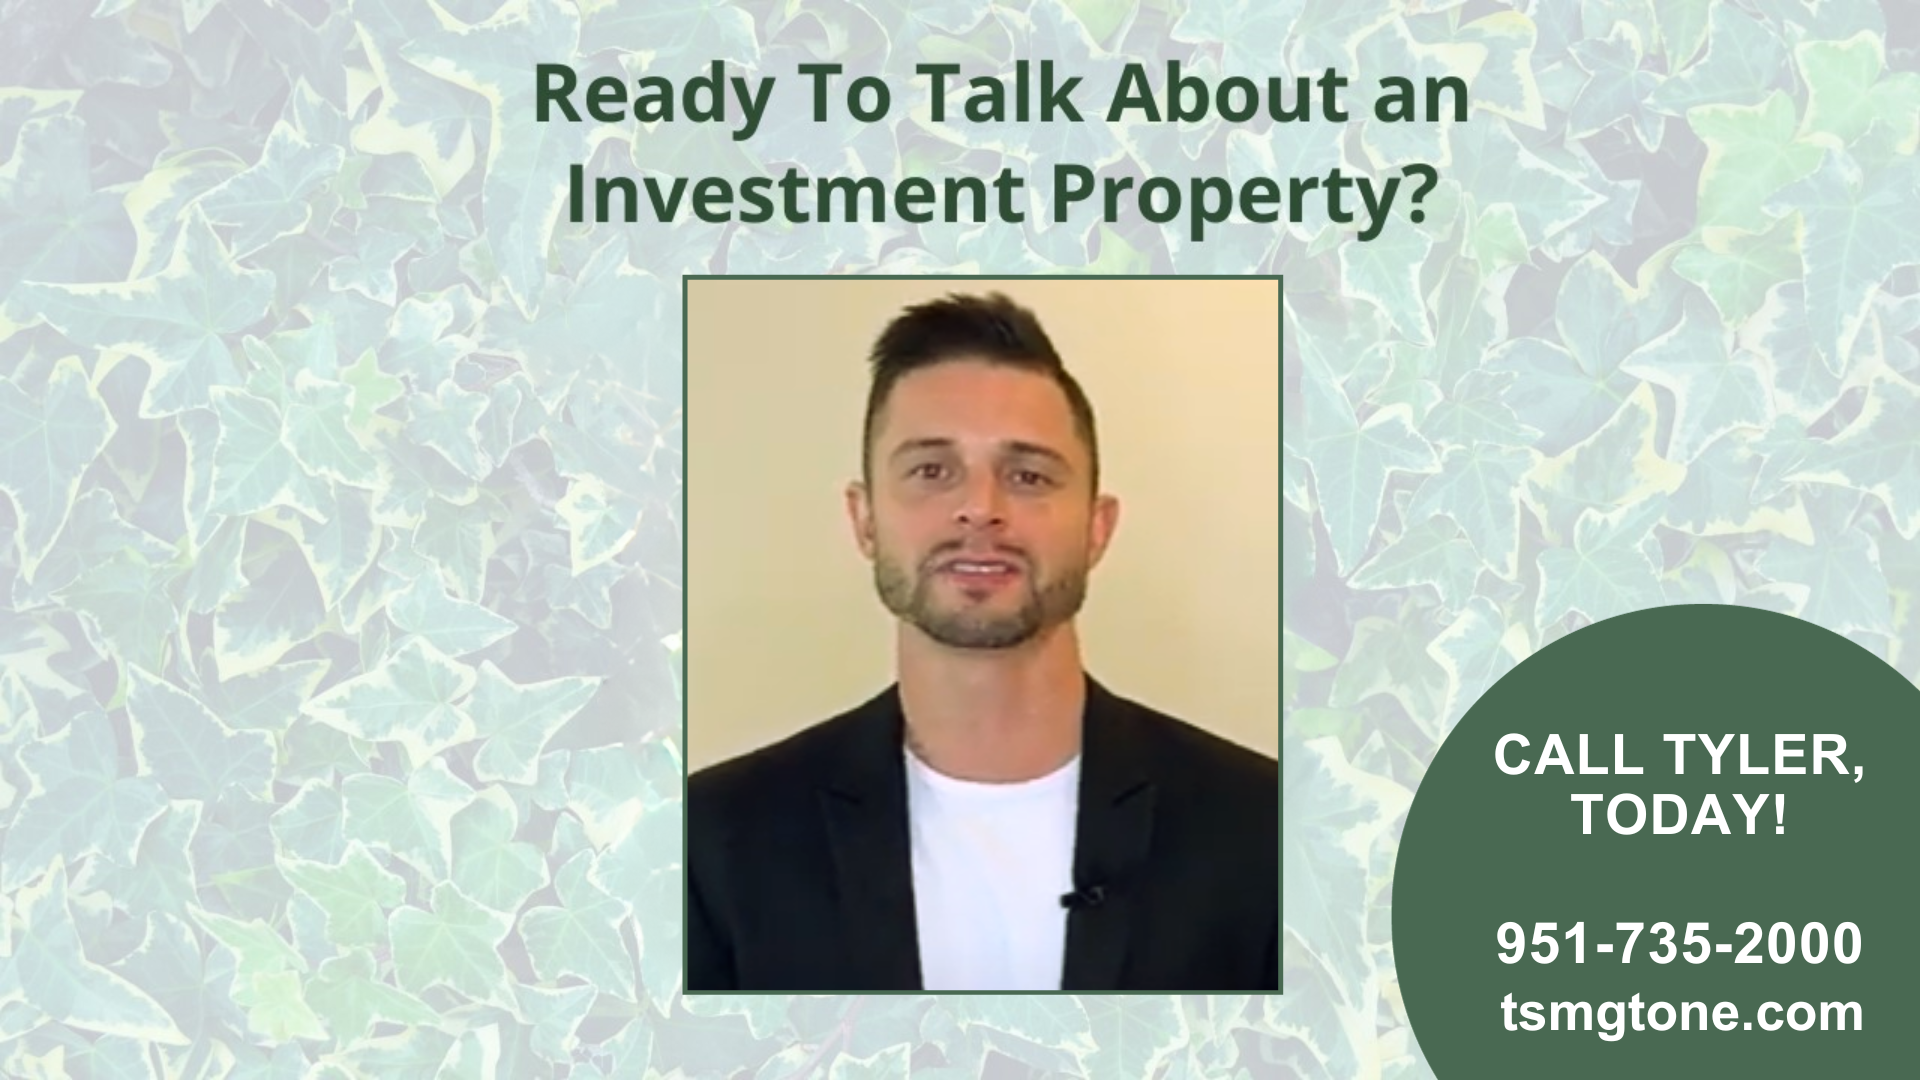 rental property investment